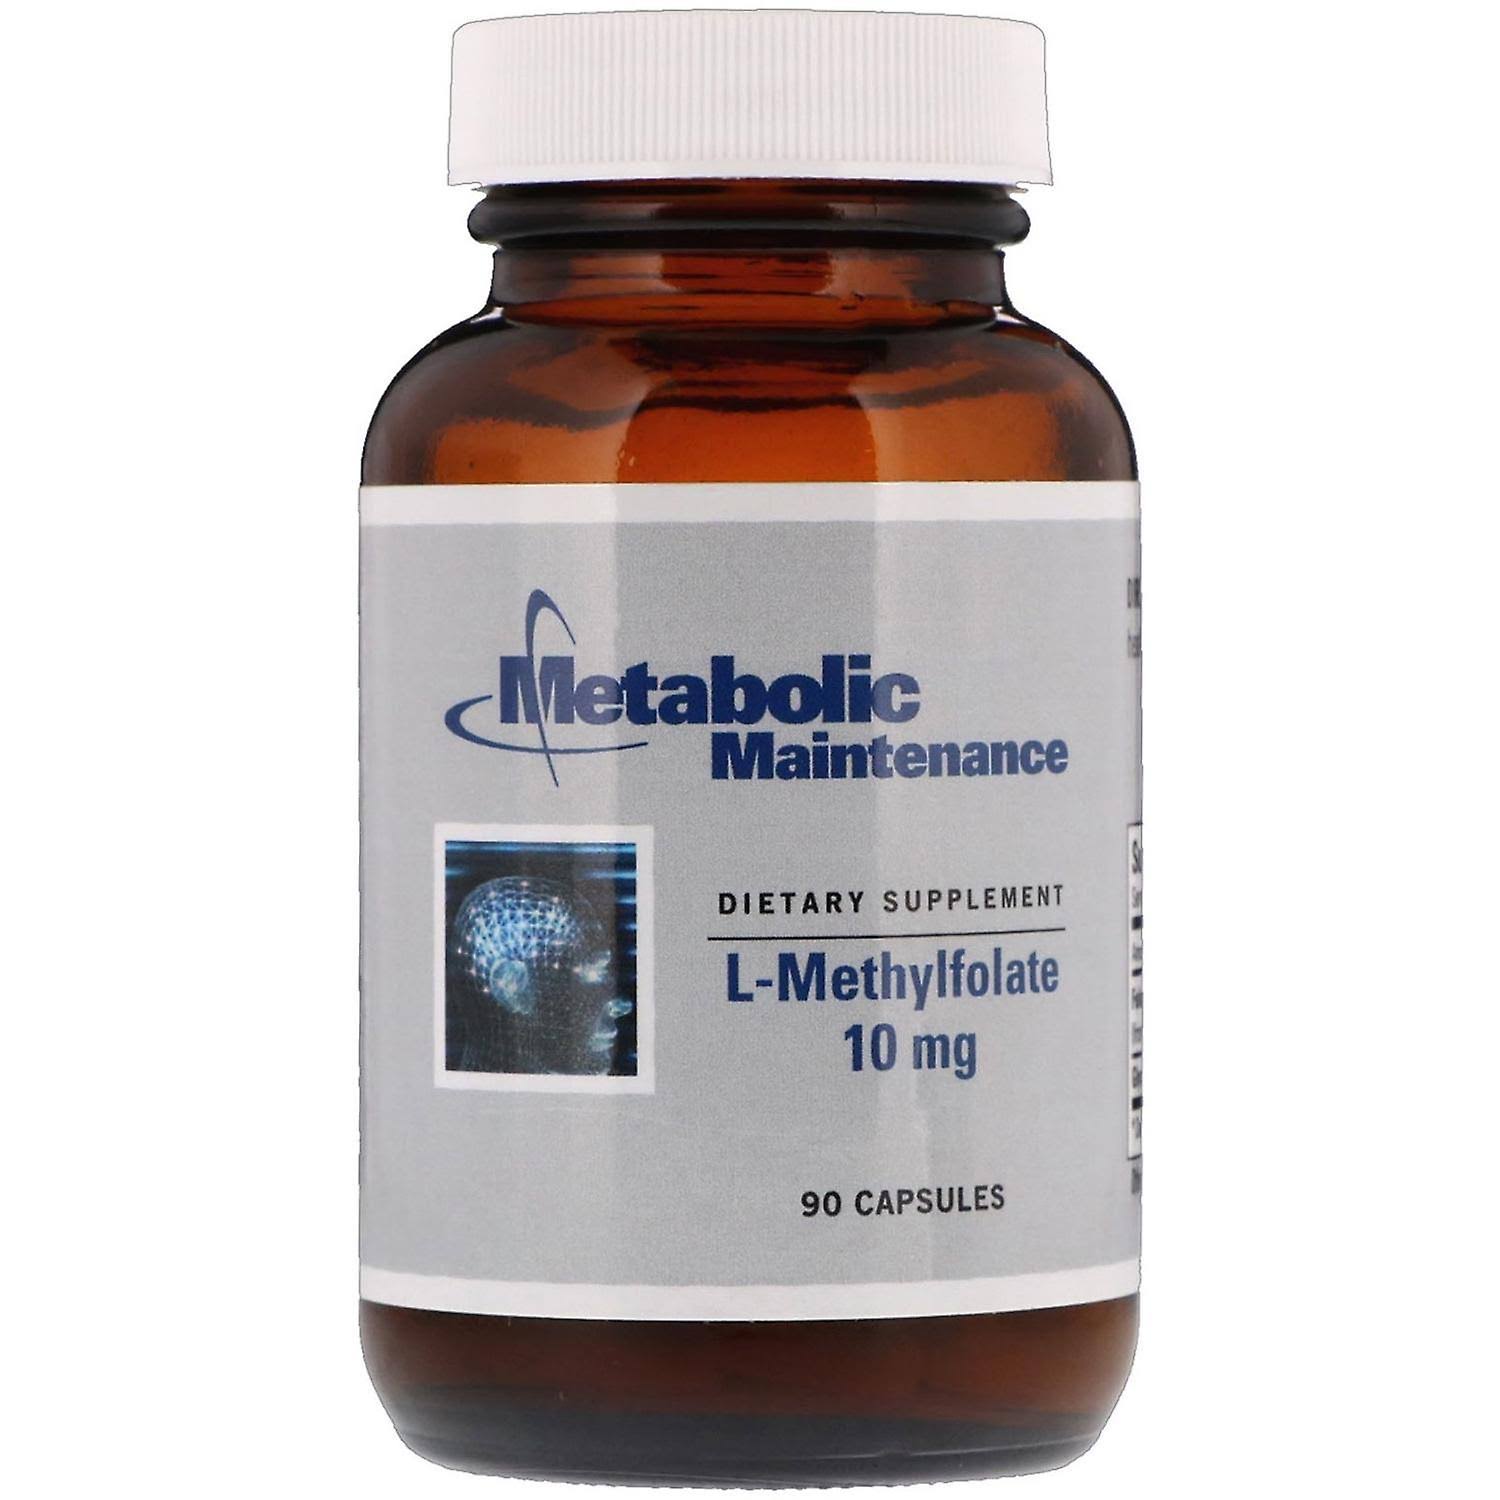 Metabolic Maintenance L-Methylfolate Dietary Supplement - 5mg, 90 Capsules